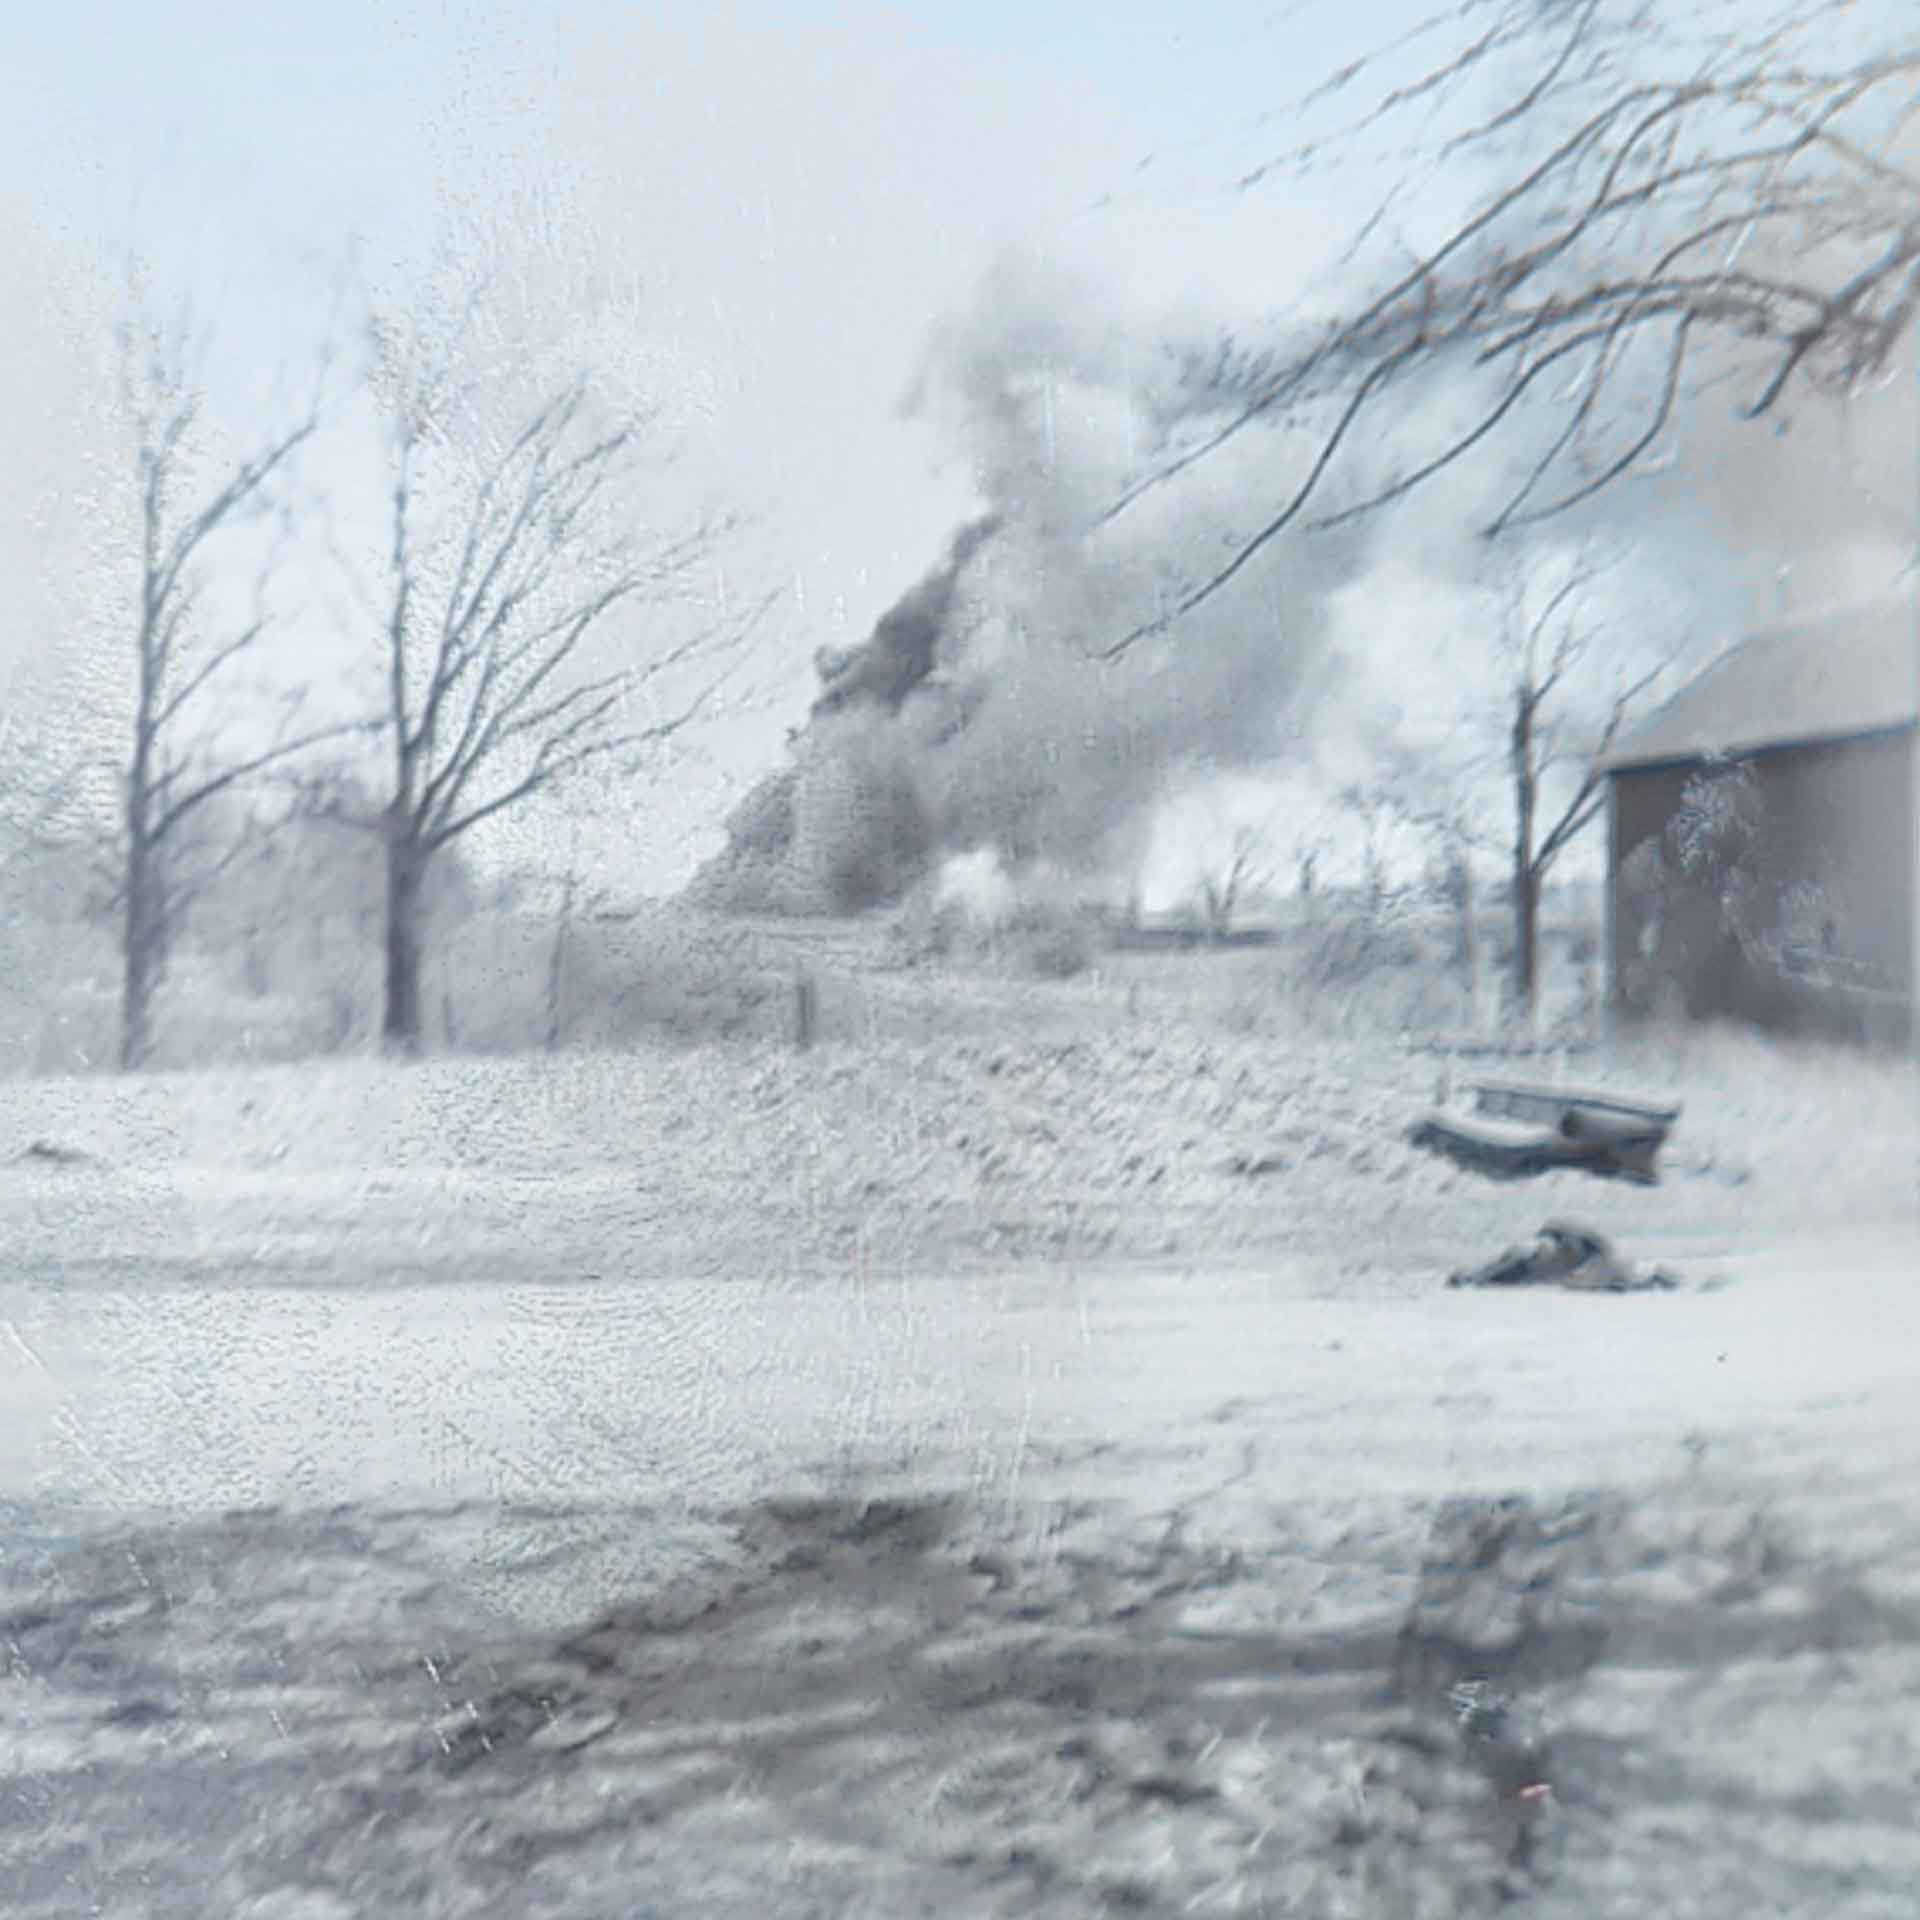 Cooks Farm Dairy Barn on fire 1950's